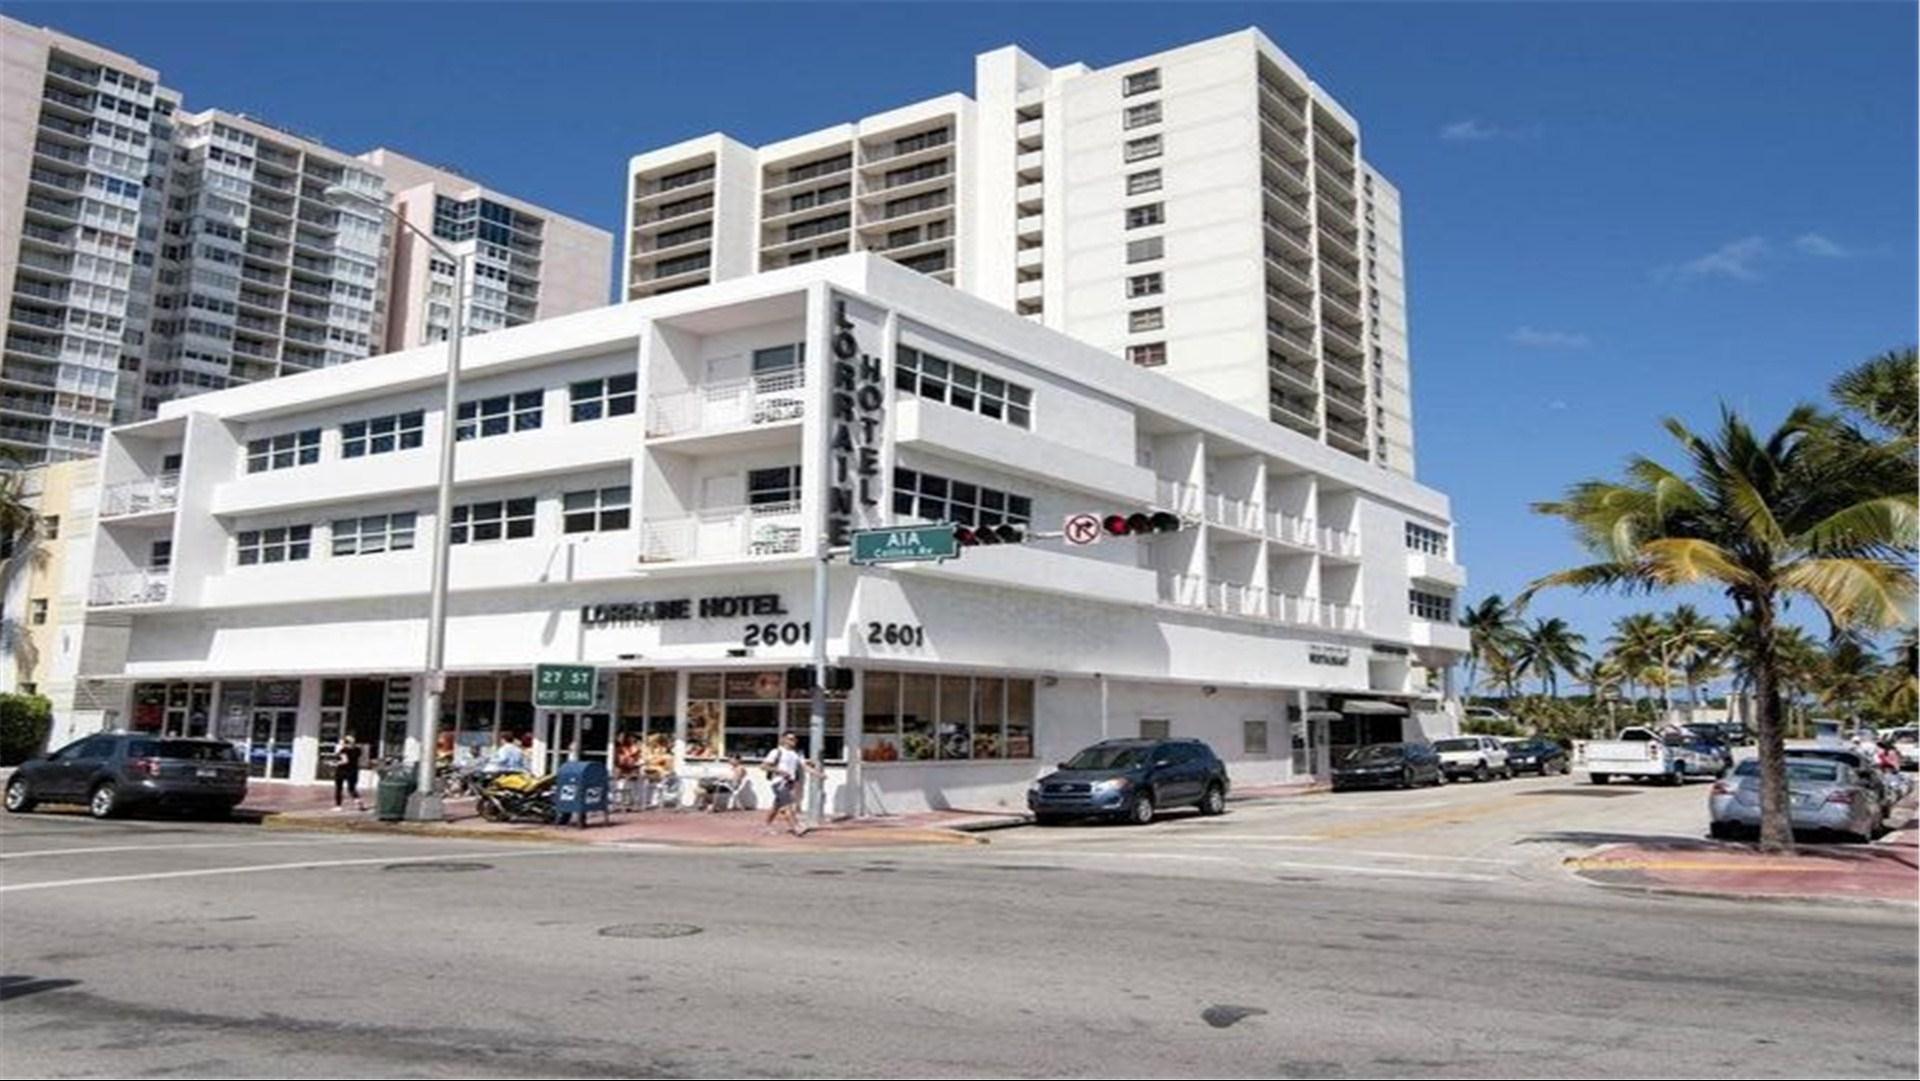 The Lorraine Hotel in Miami Beach, FL